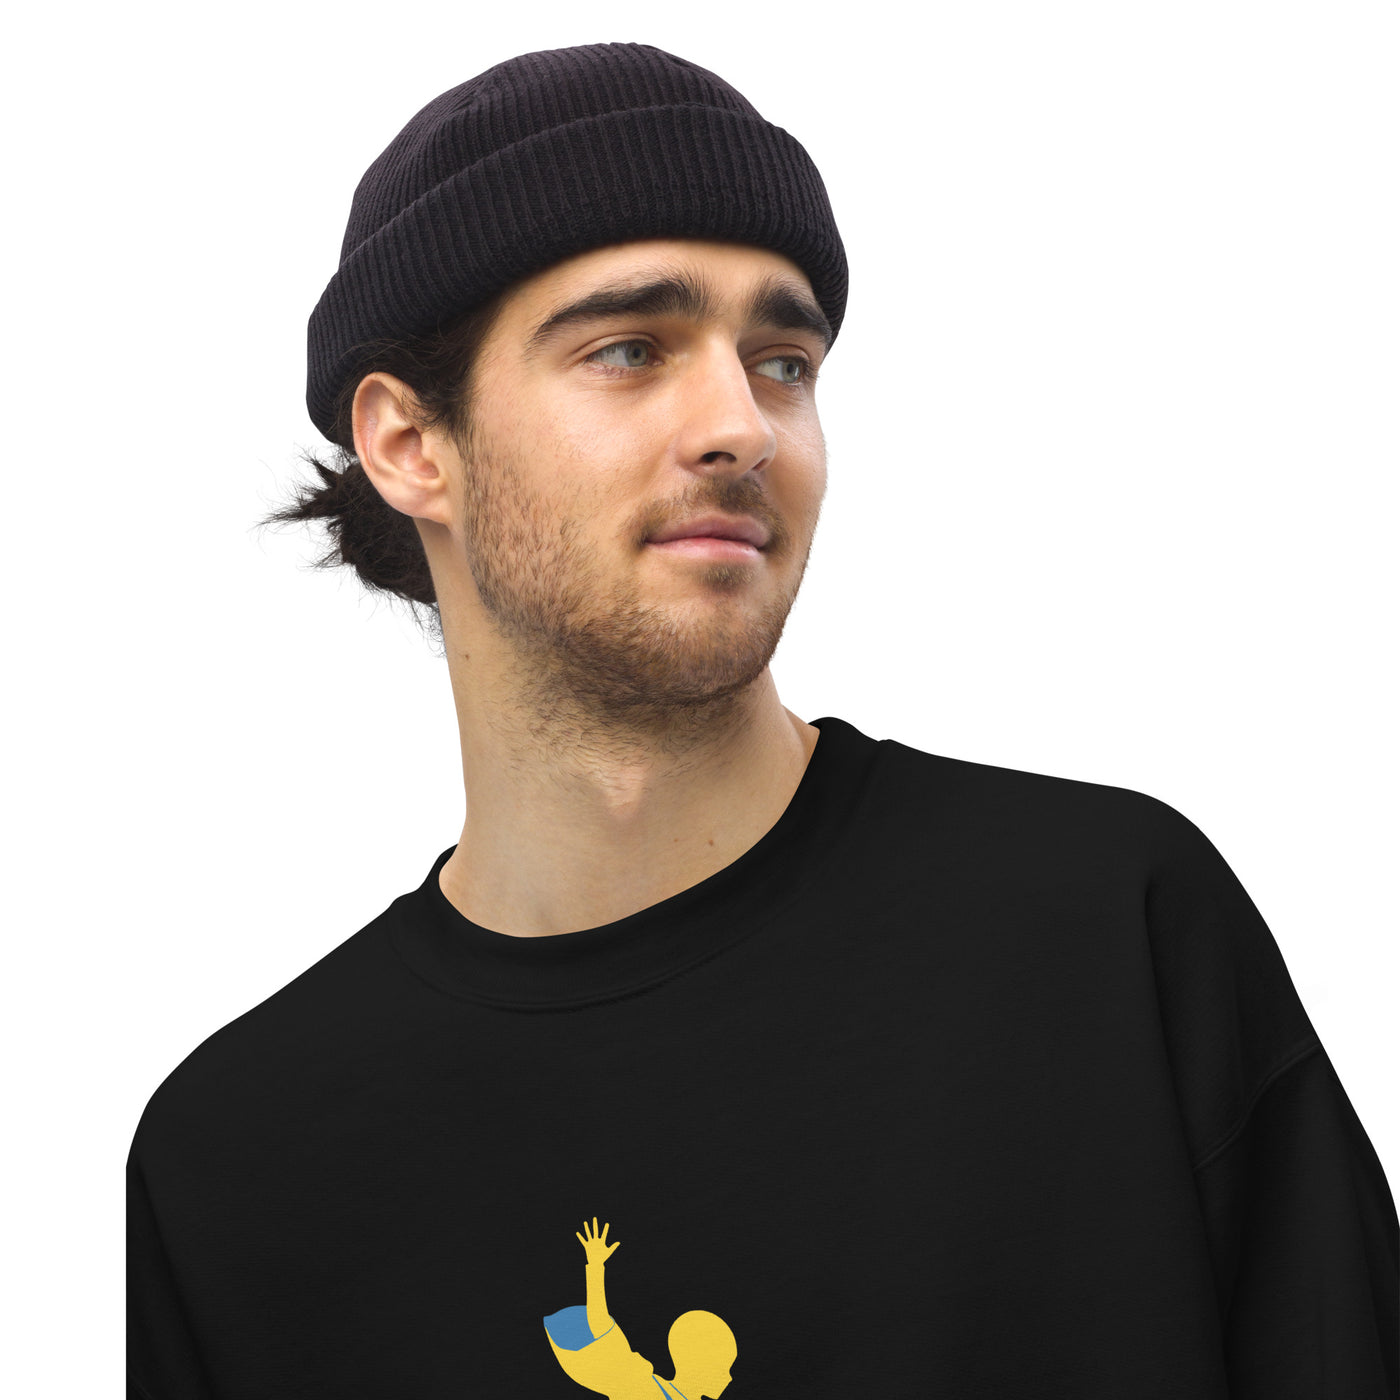 I Know Python Scripting - Unisex Sweatshirt